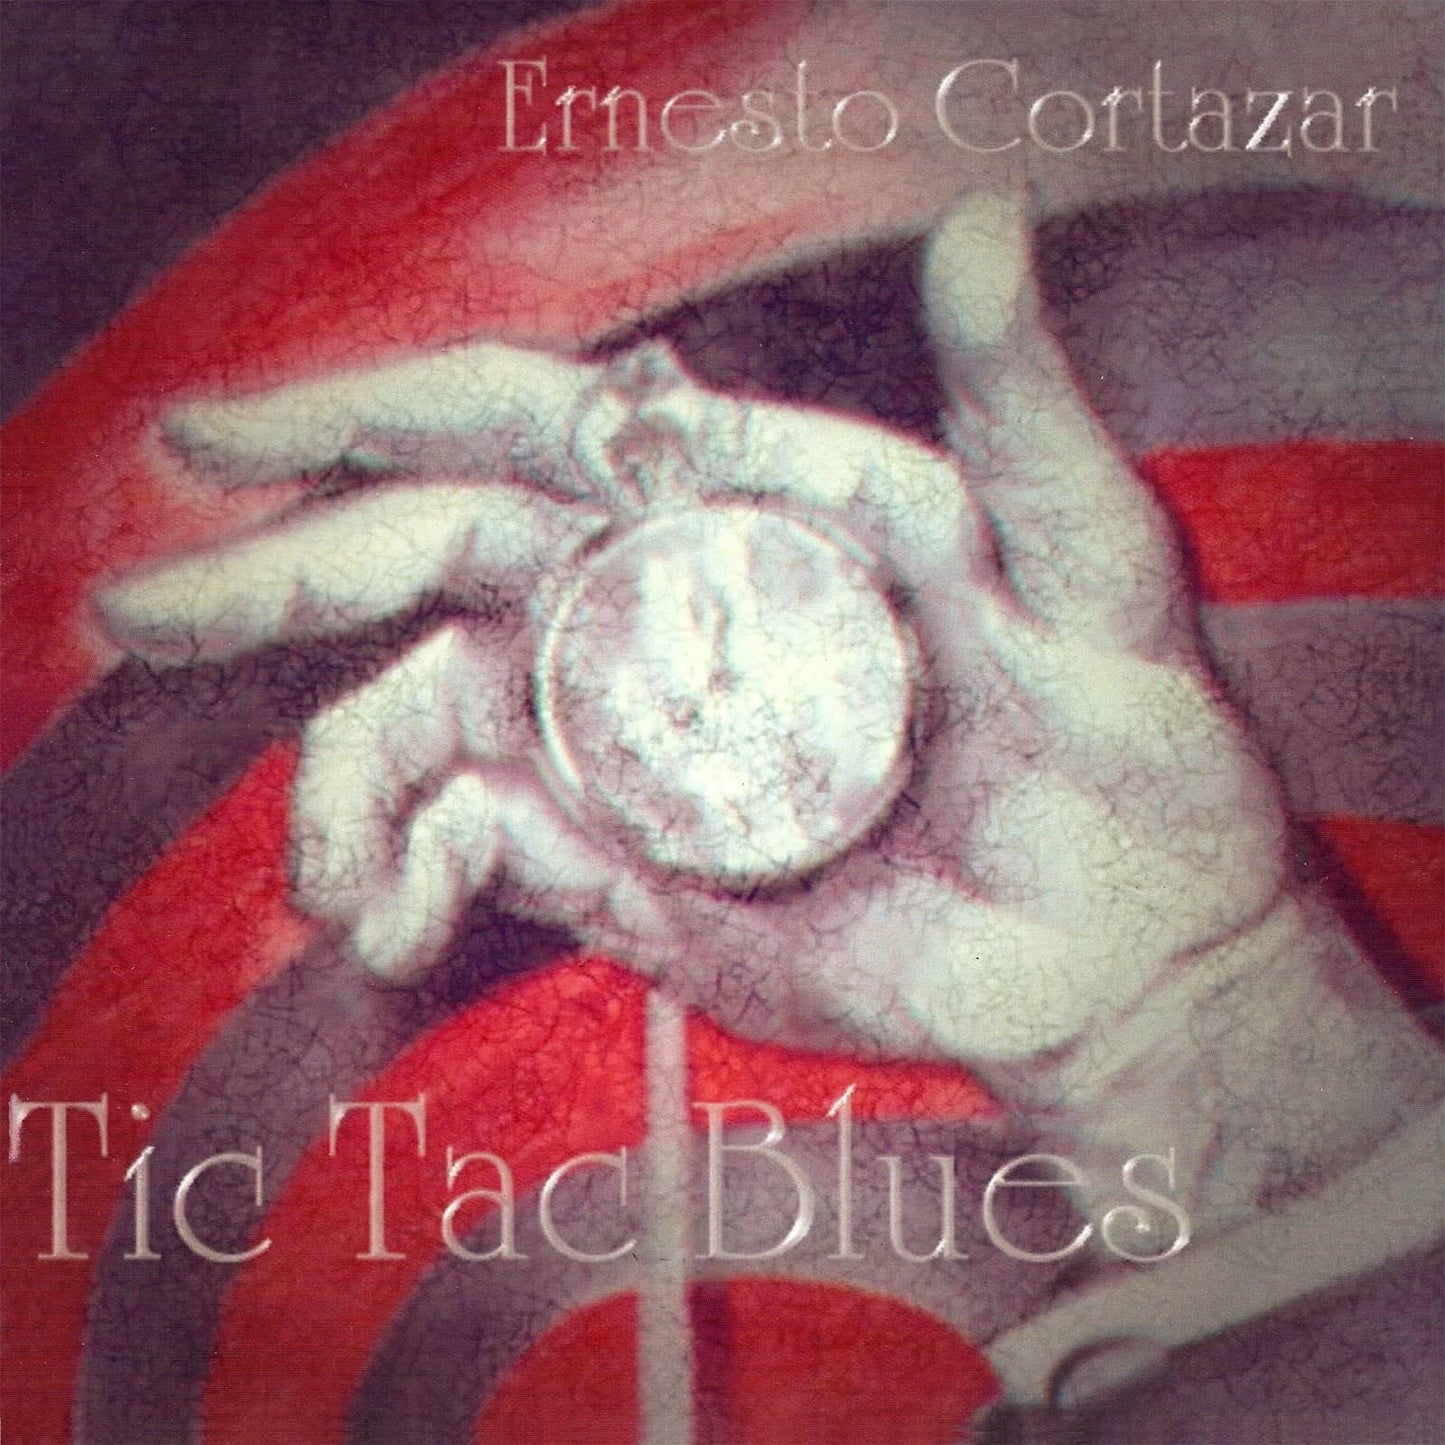 Tic Tac Blues MP3 Album Composed by Ernesto Cortazar